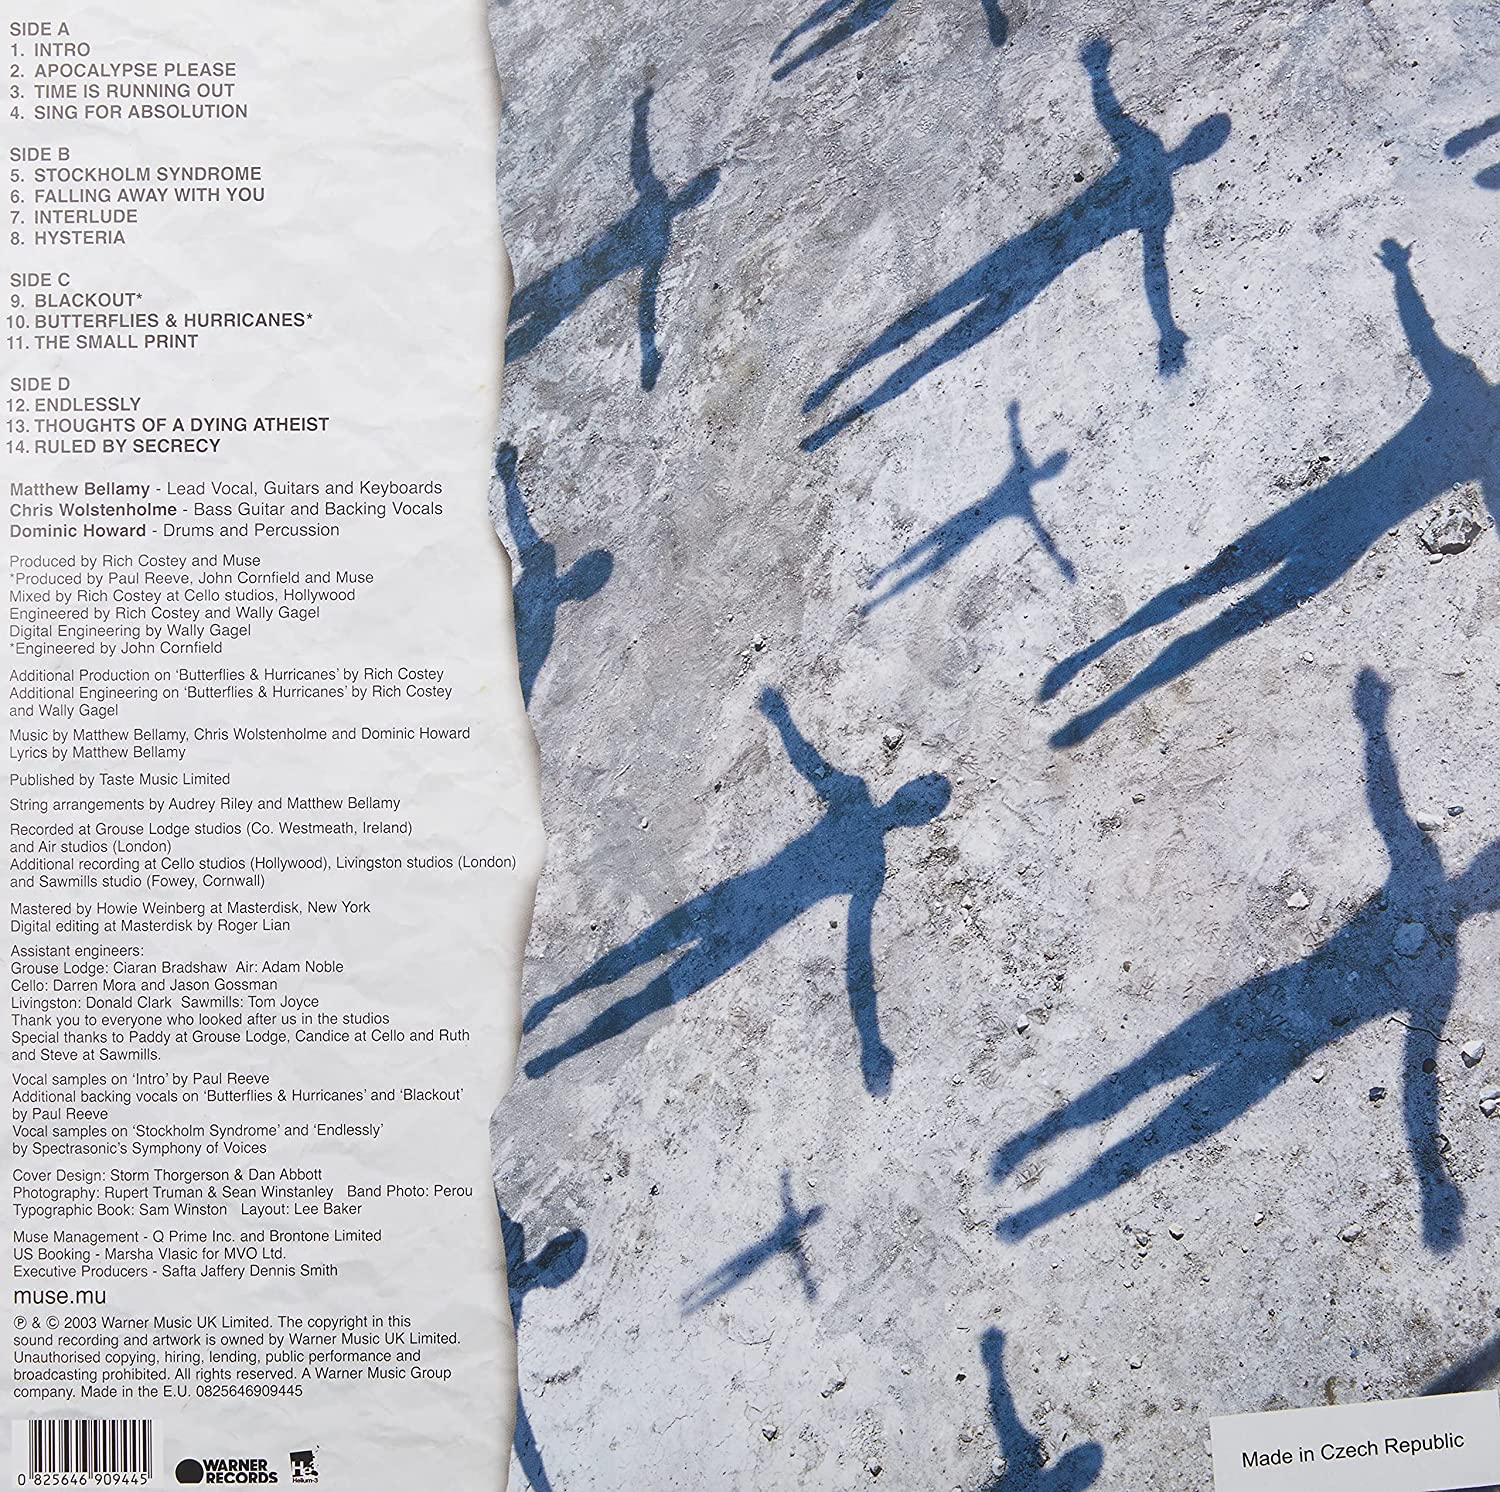 Muse Absolution Vinyl LP